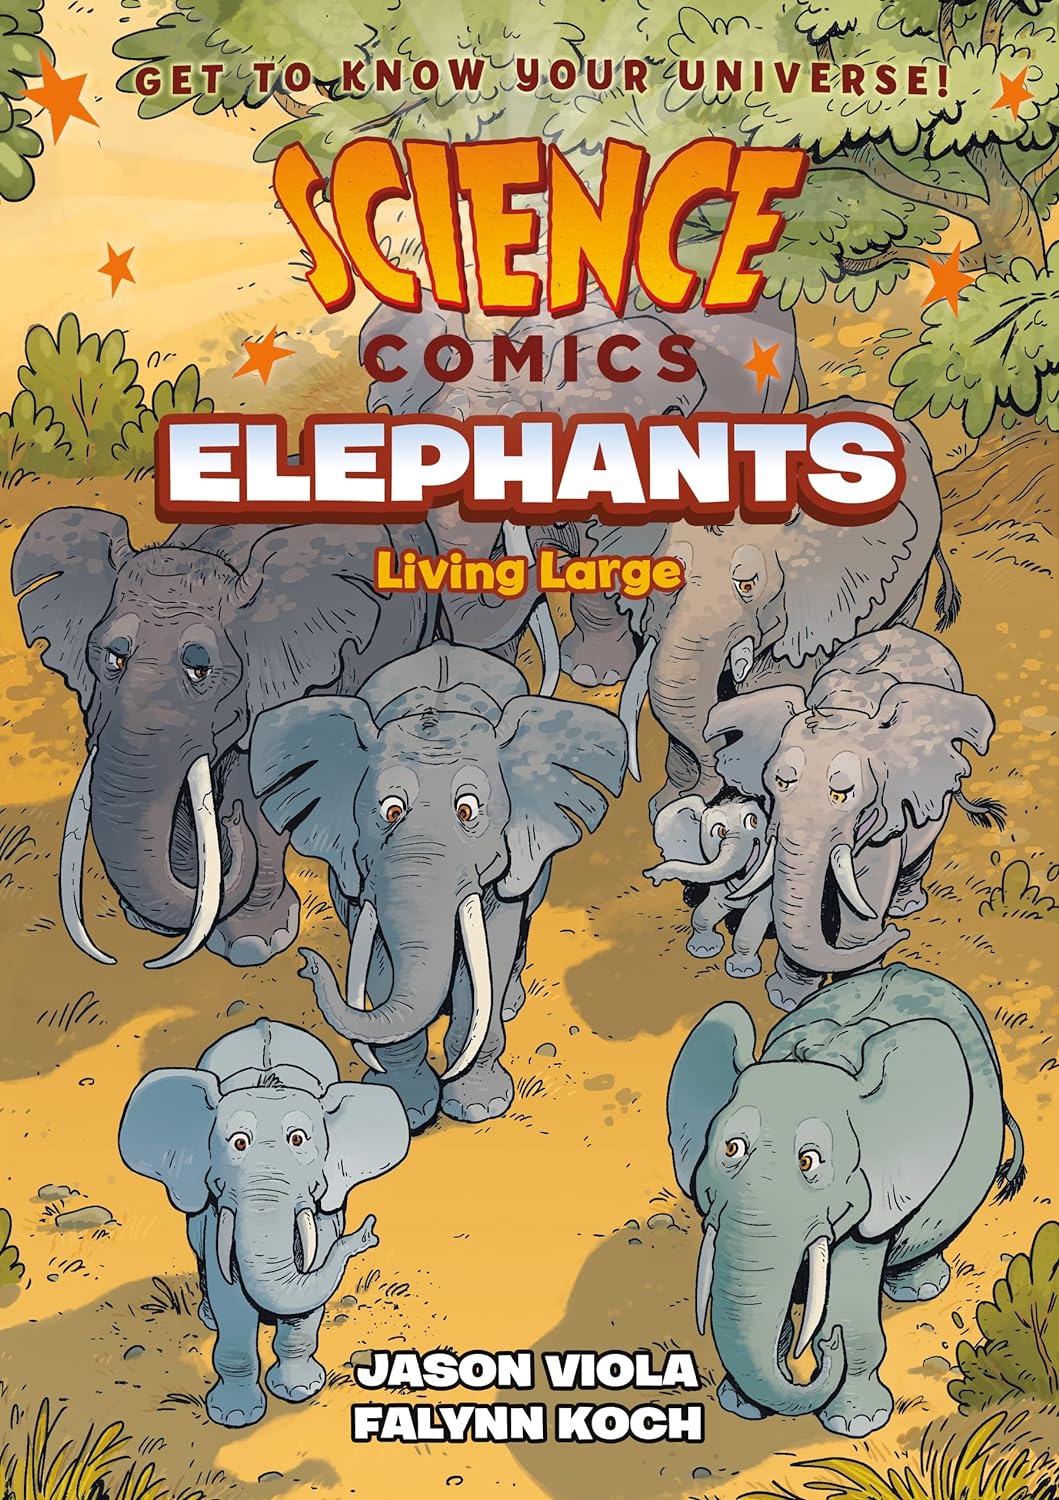 Science Comics: Elephants: Living Large by Jason Viola